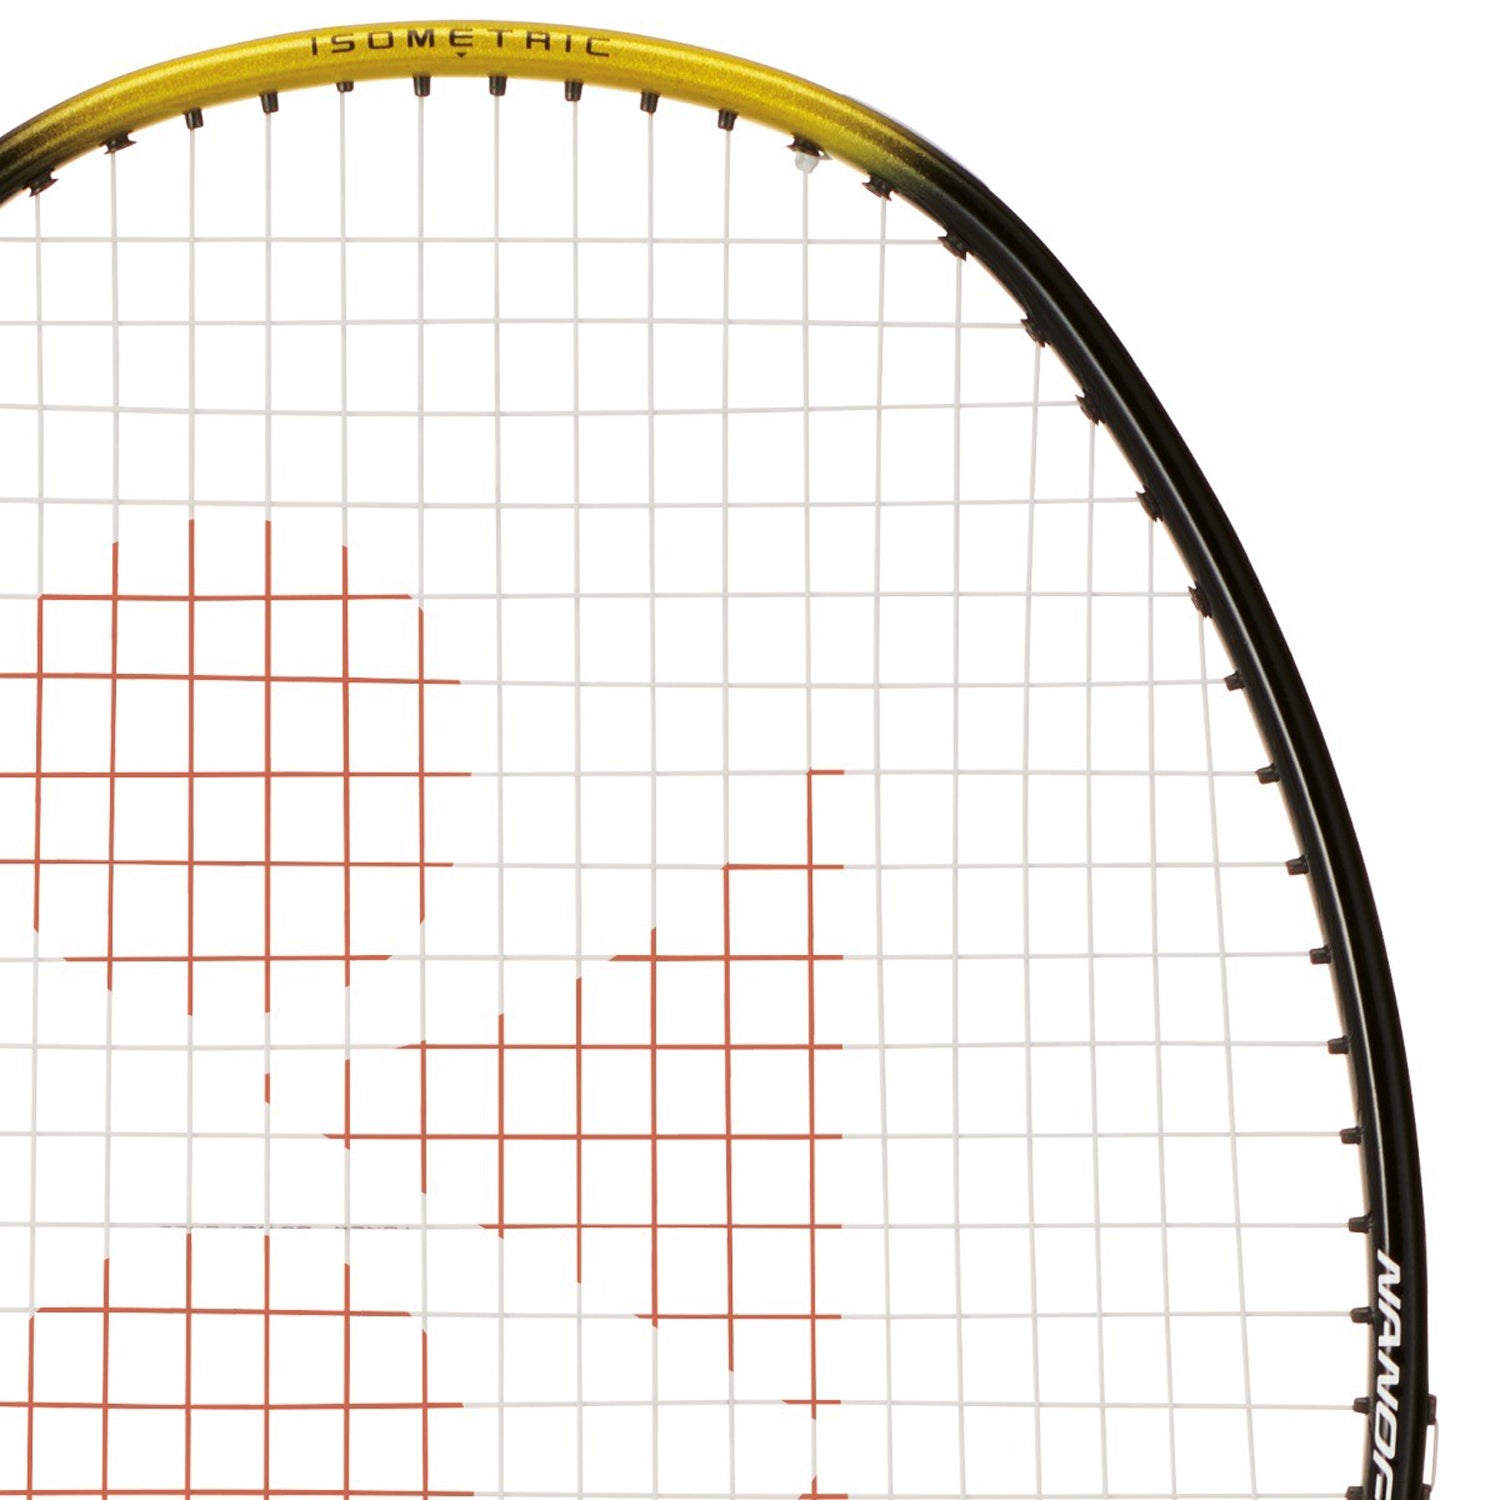 Yonex Nanoflare 001 Feel Strung Badminton Racquet, G4 - Best Price online Prokicksports.com